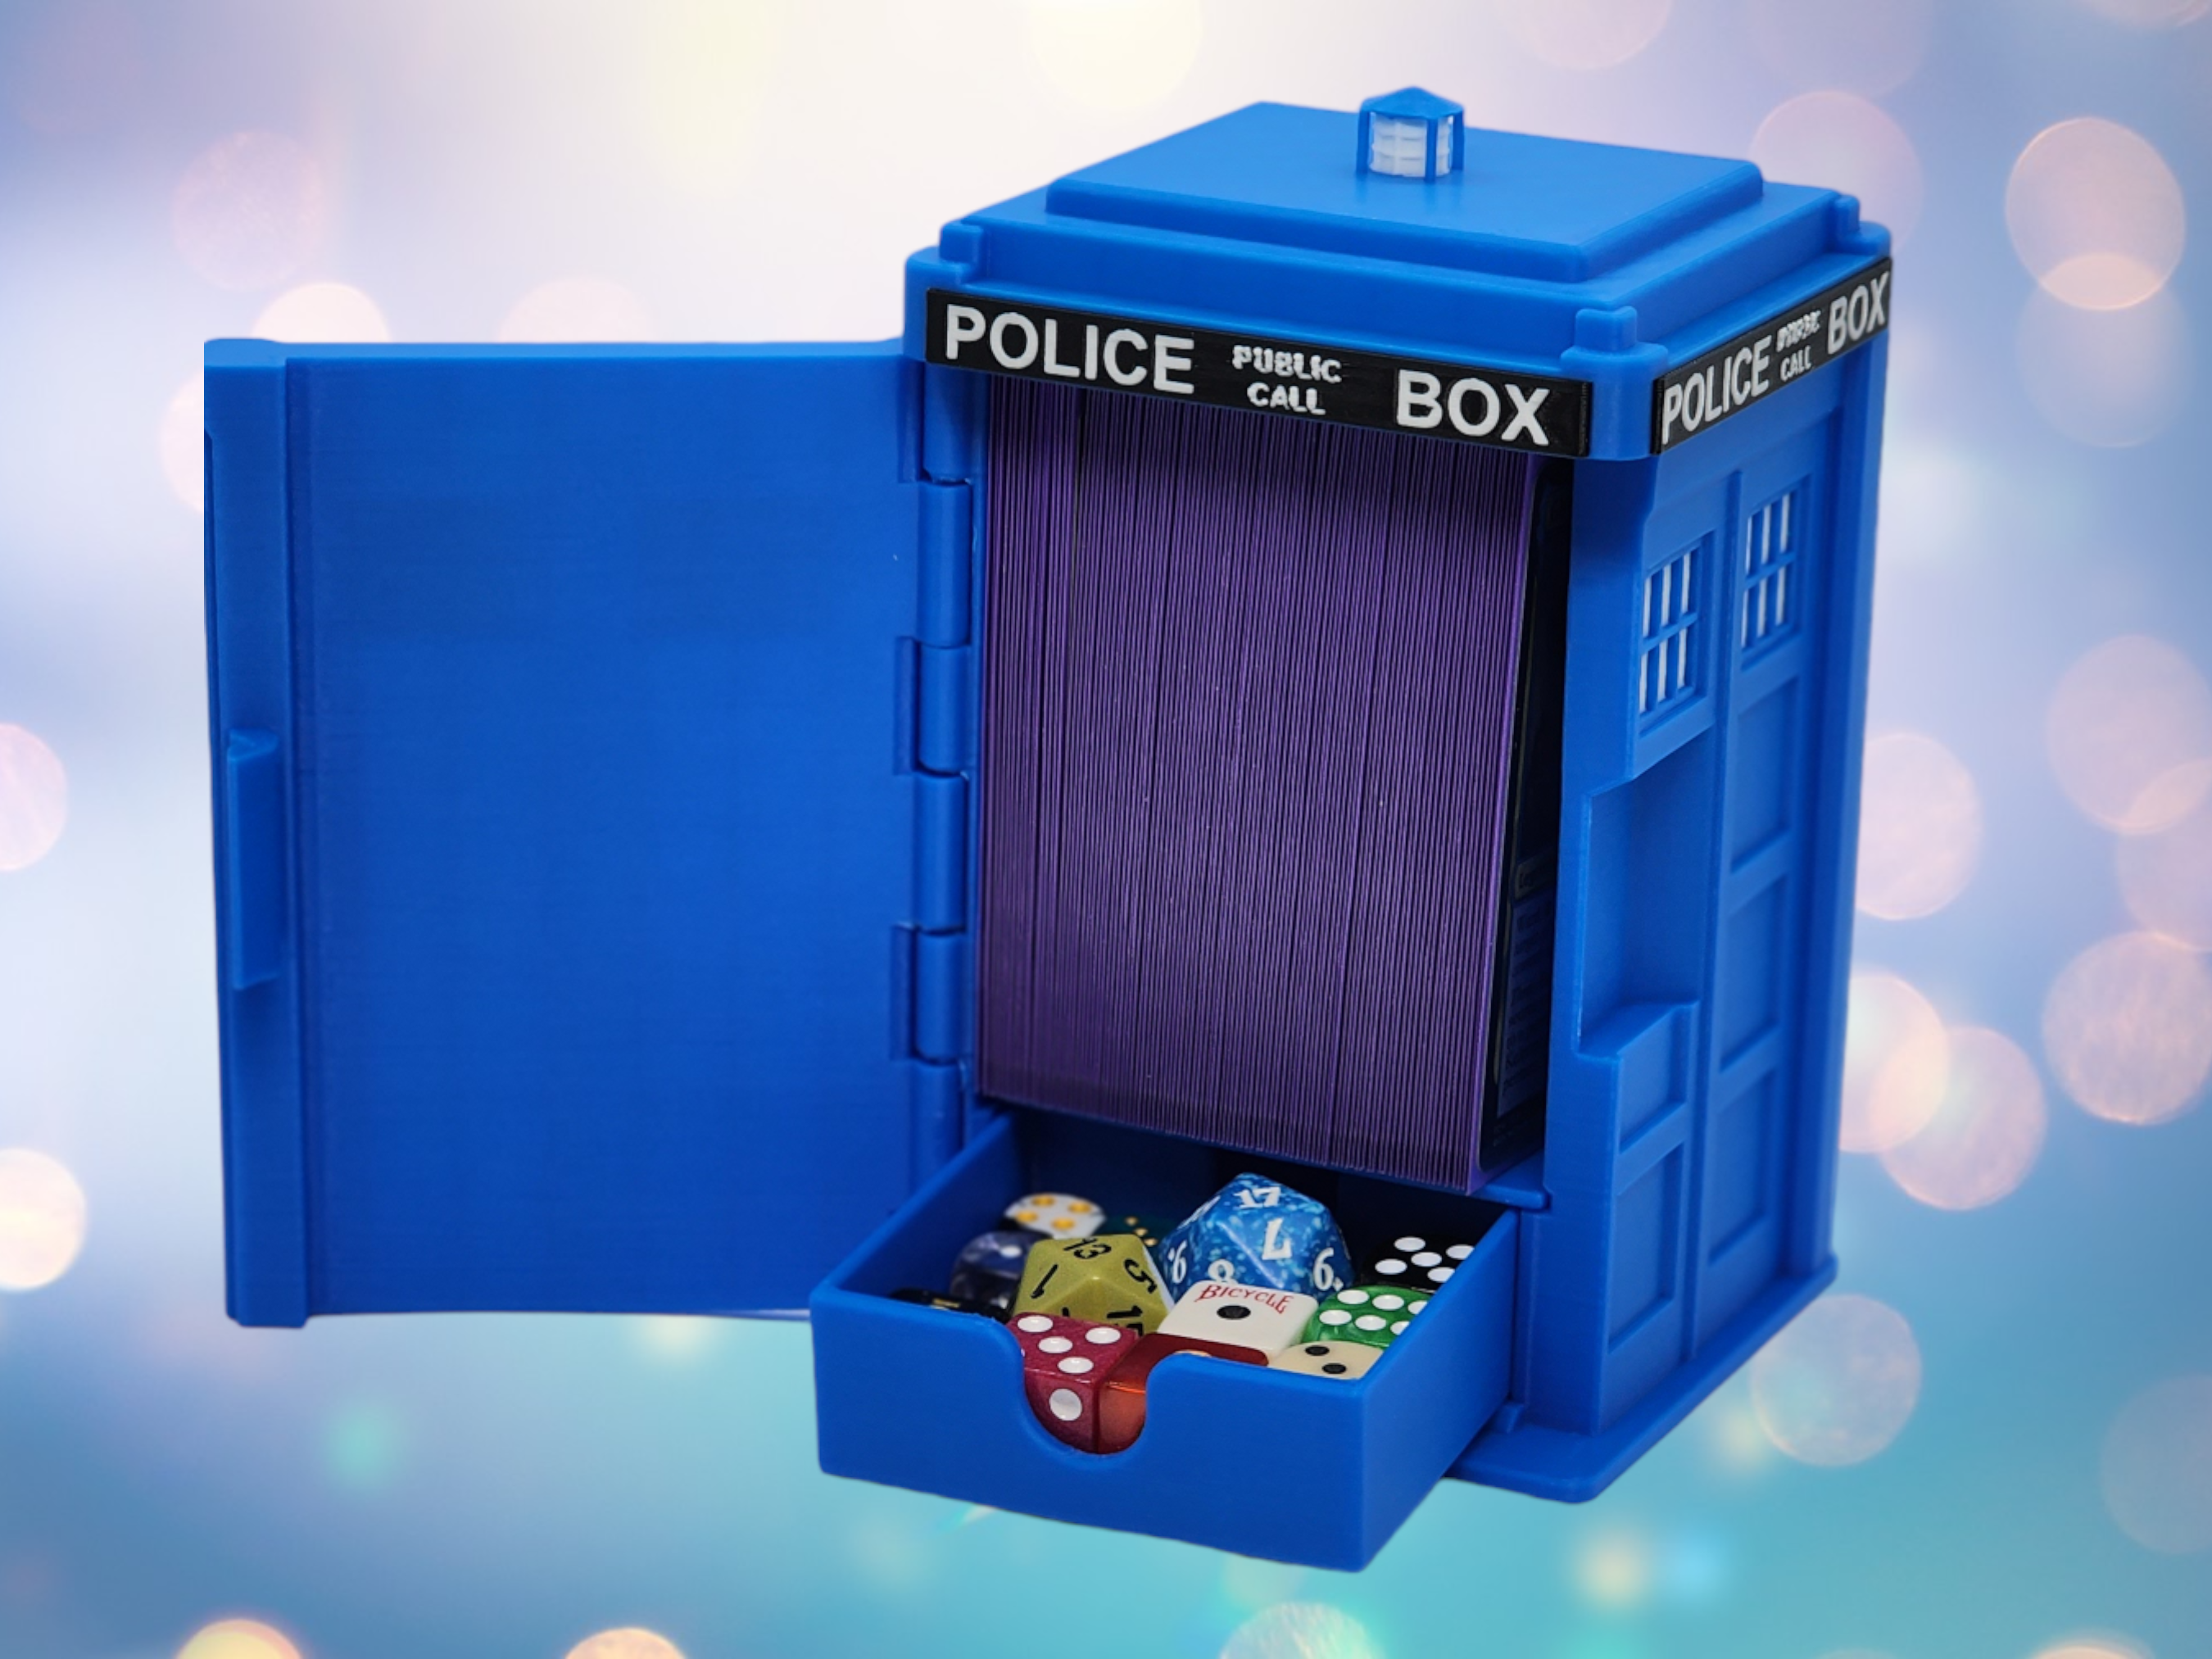 MTG Porta-potty Deck Box for EDH / Commander Magic the Gathering Dice Box  Snoo3d 